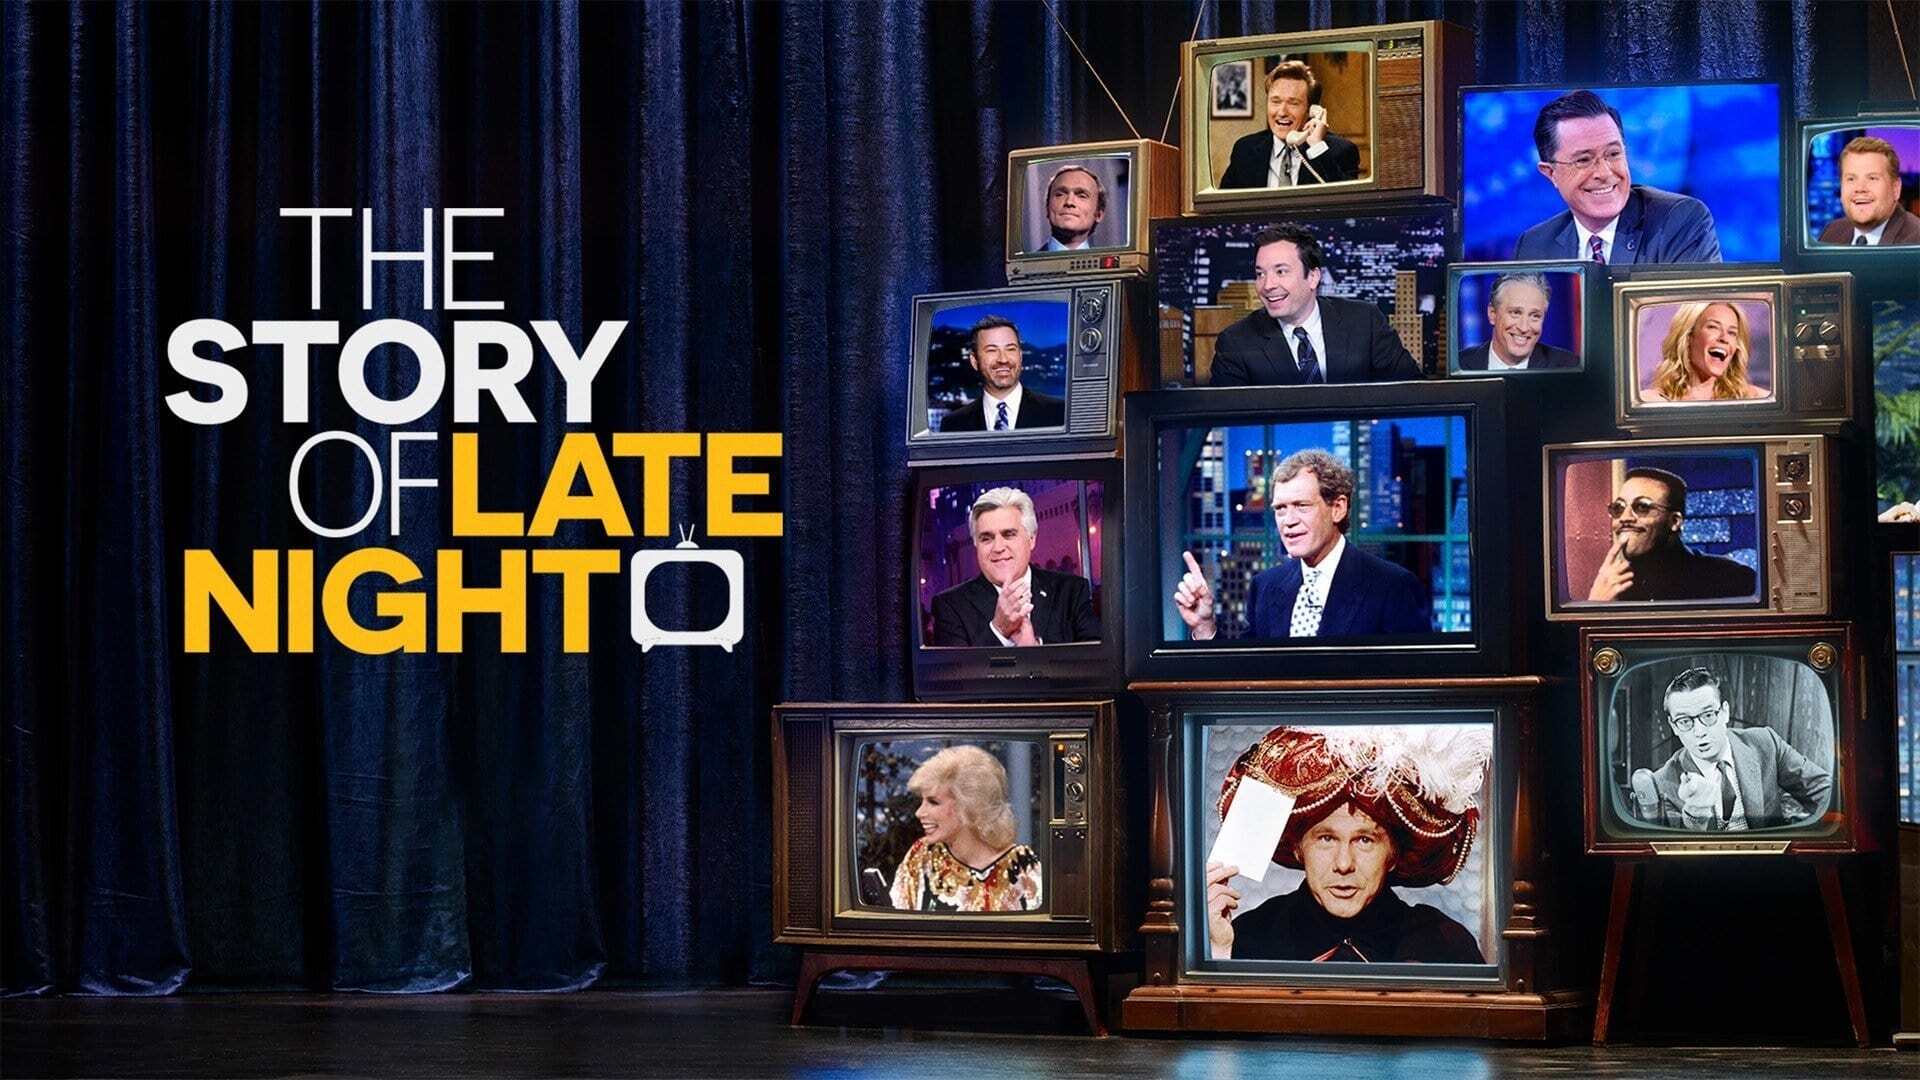 The Story of Late Night / История поздневечерних шоу